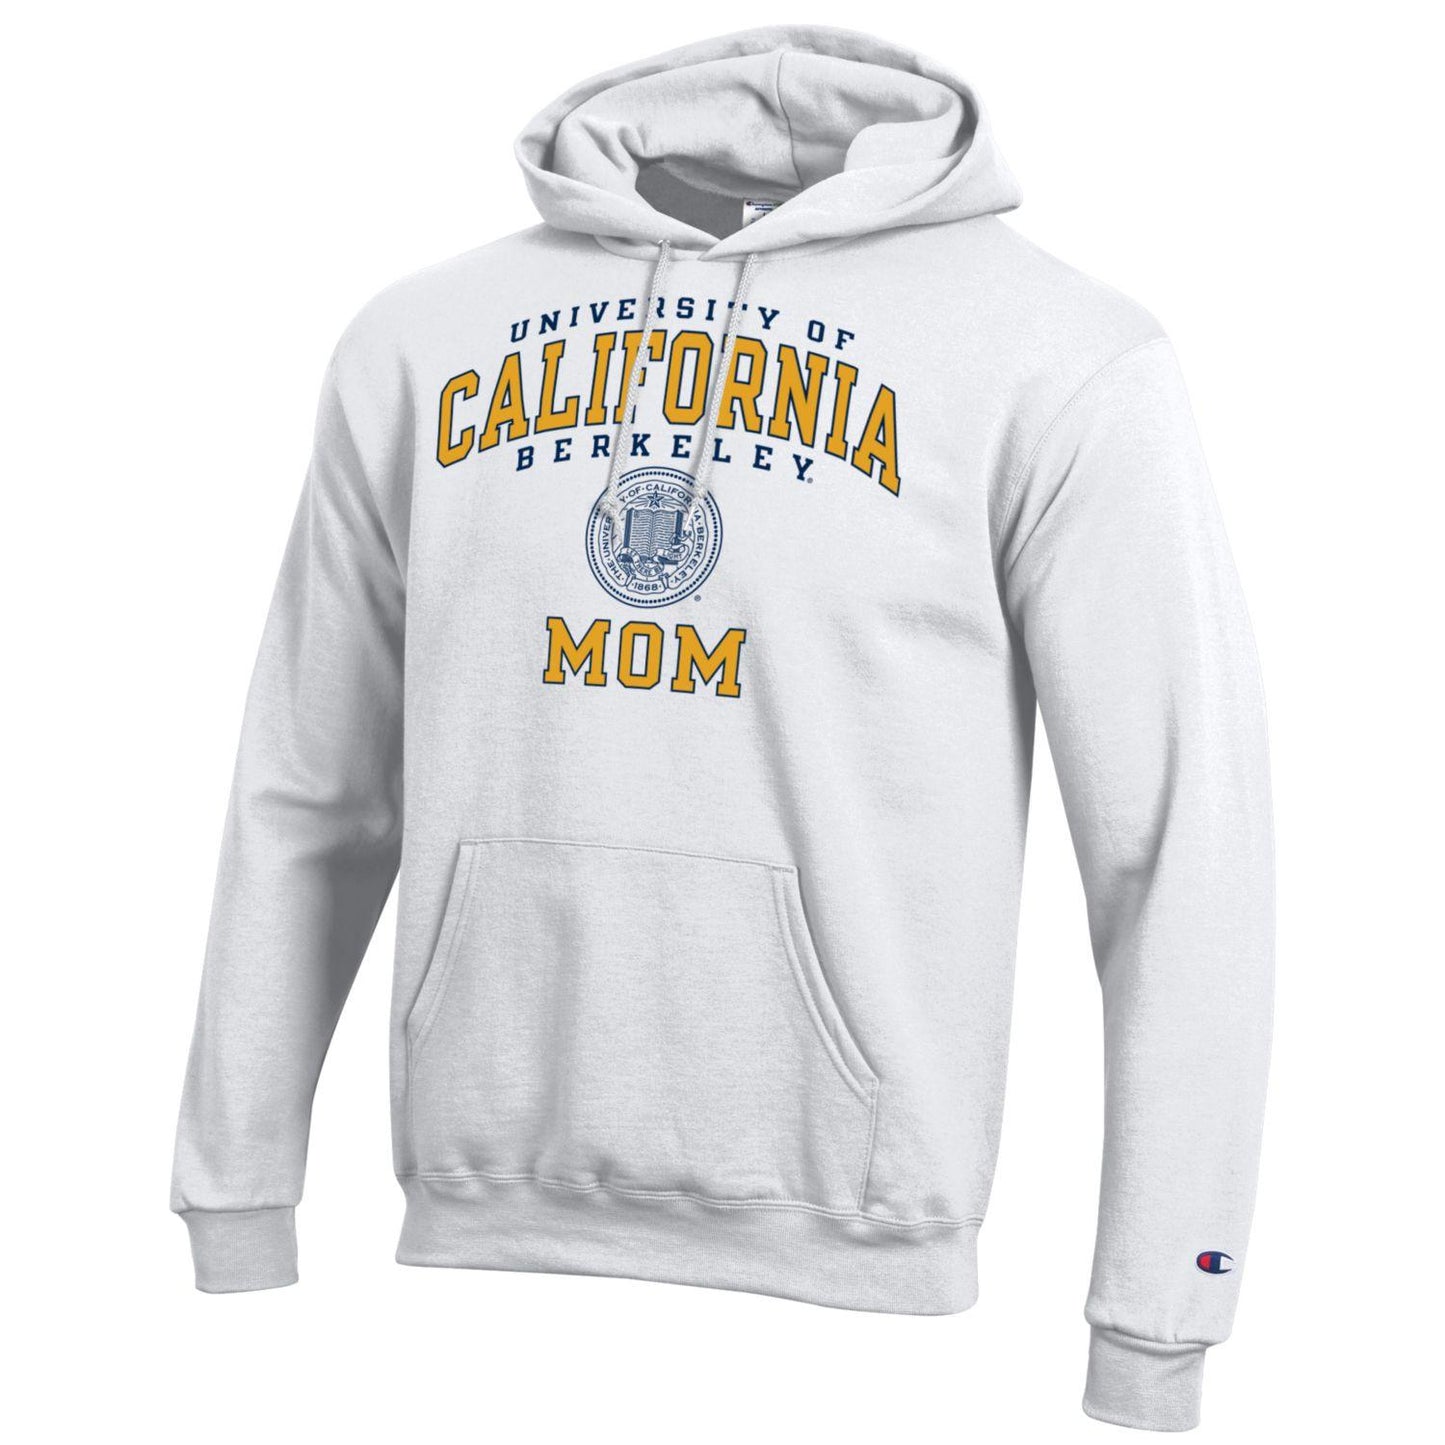 U.C. Berkeley Mom three arch hoodie sweatshirt-White-Shop College Wear